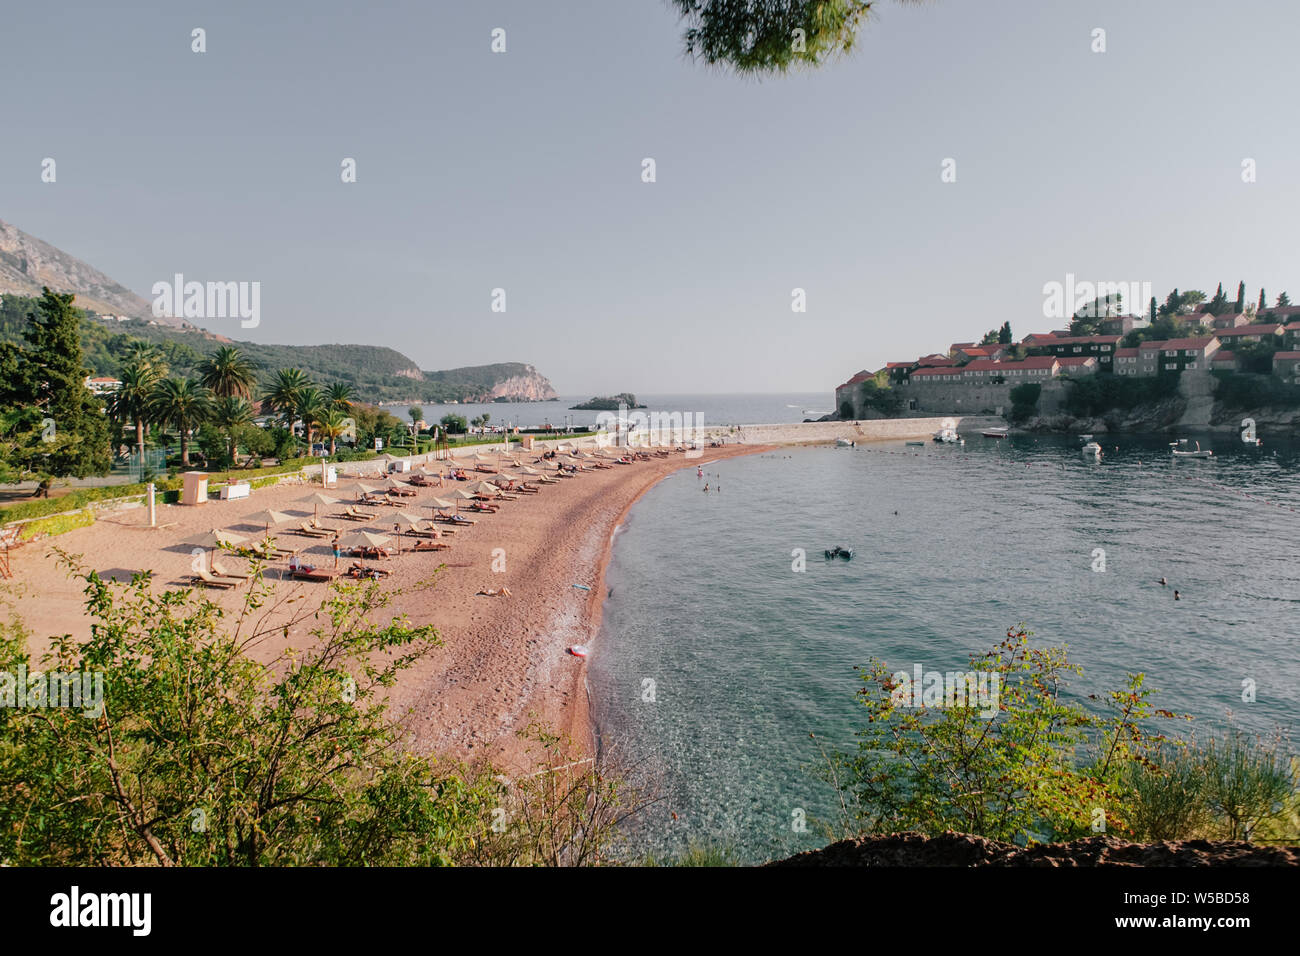 People sunbathe and swim on the beach of the resort Sveti Stefan in Montenegro Stock Photo